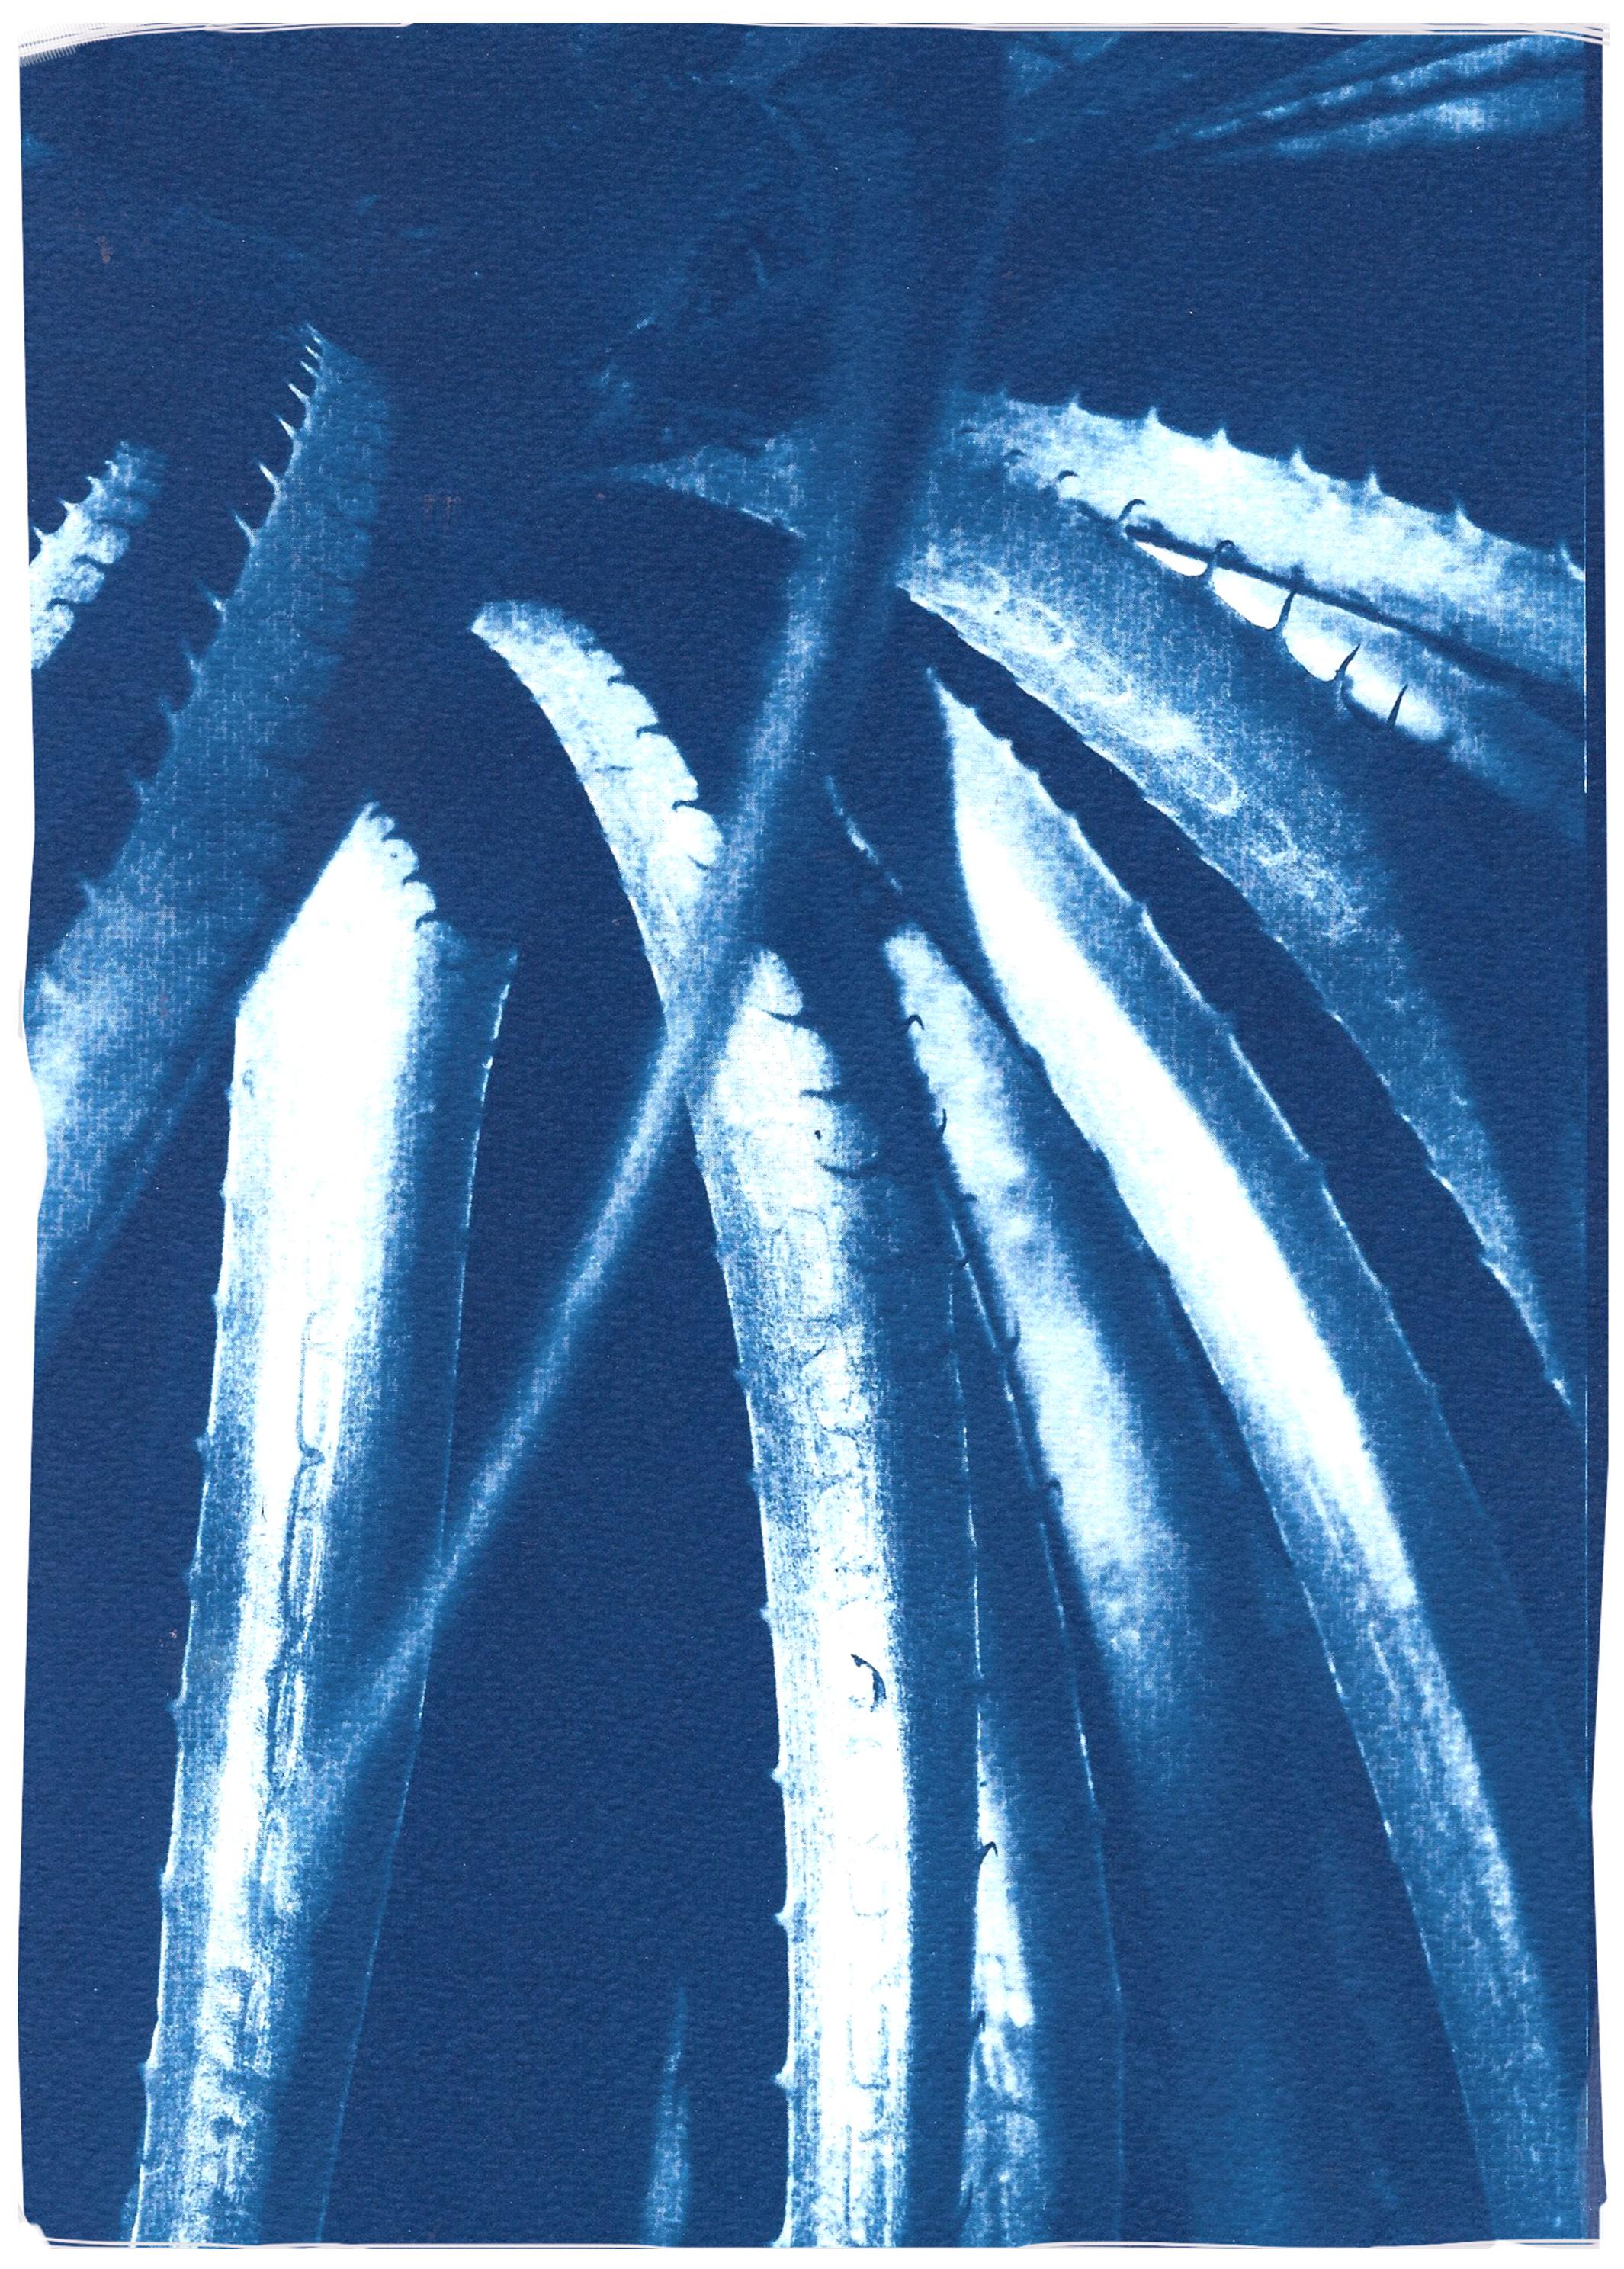 Jurassic Aloe Leaves, Botanical Cyanotype on Paper, Blue Plants, Nature Details